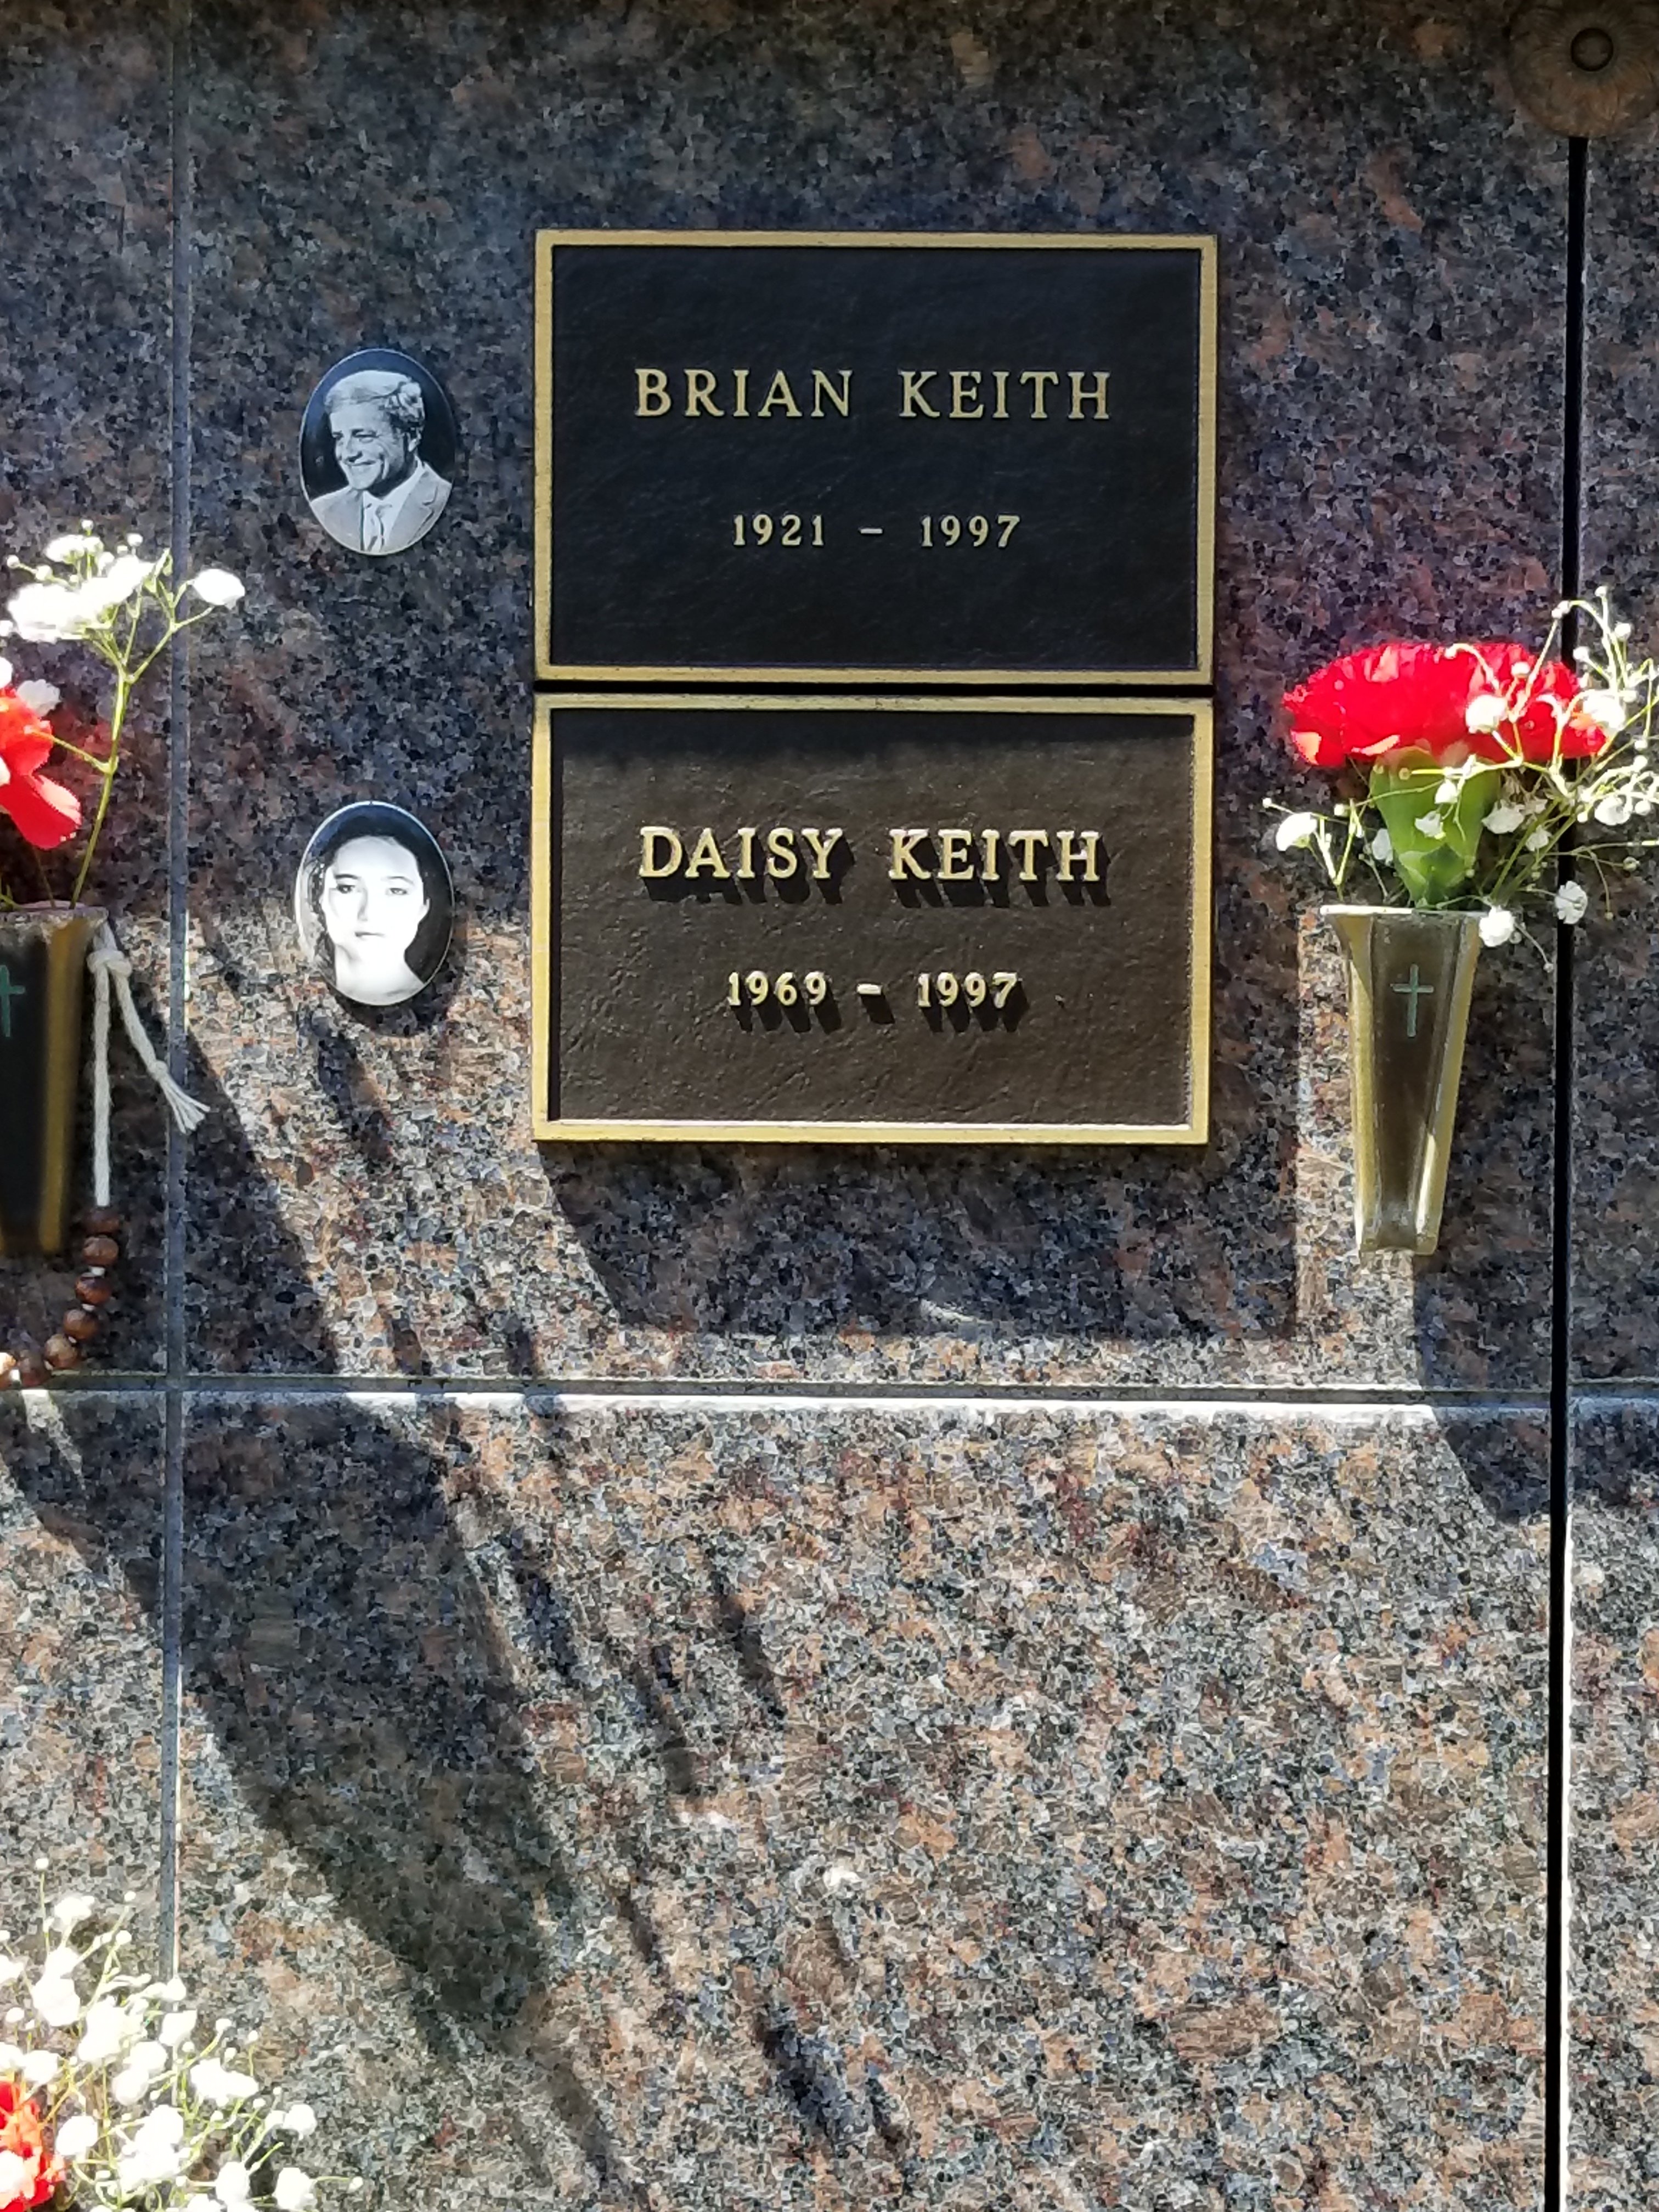 Brian Keith's Grave Marker. | Source: Wikimedia Commons, Public Domain